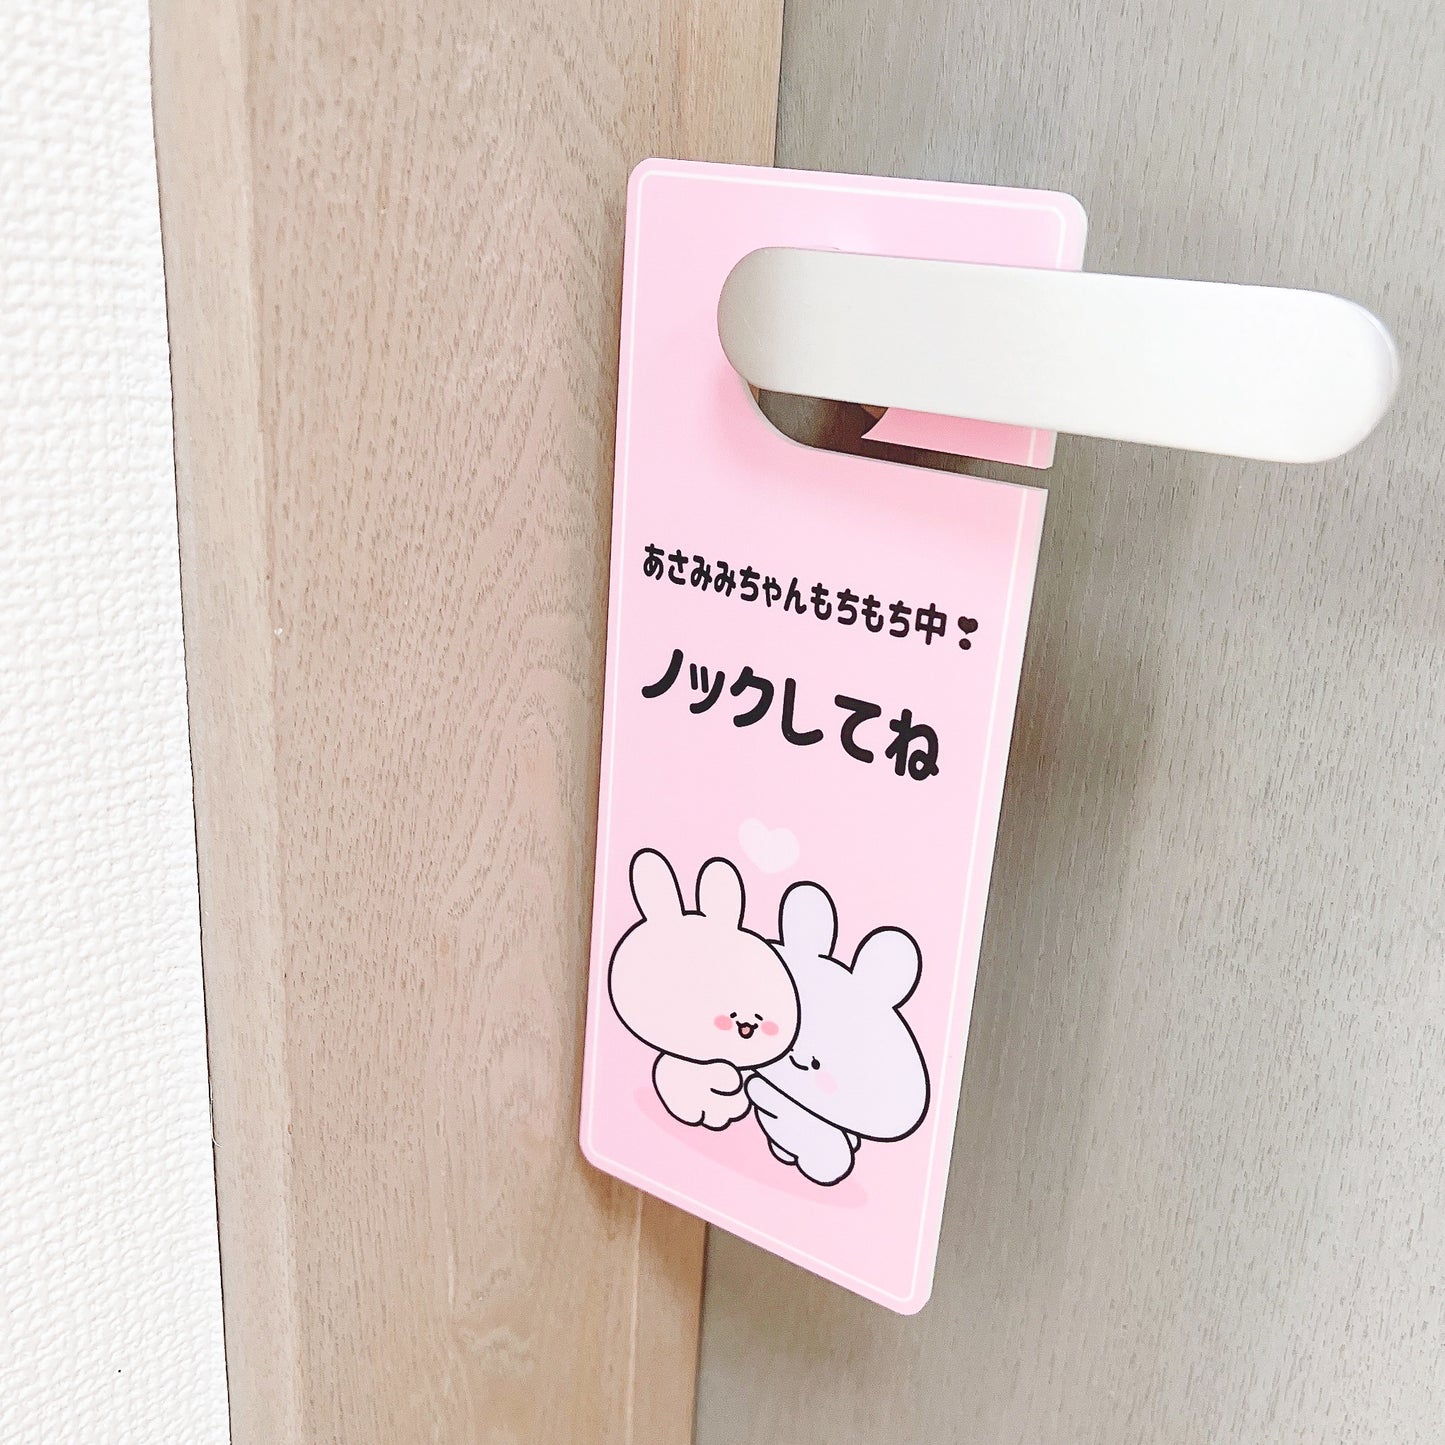 [Asamimi-chan] Türschild angebracht